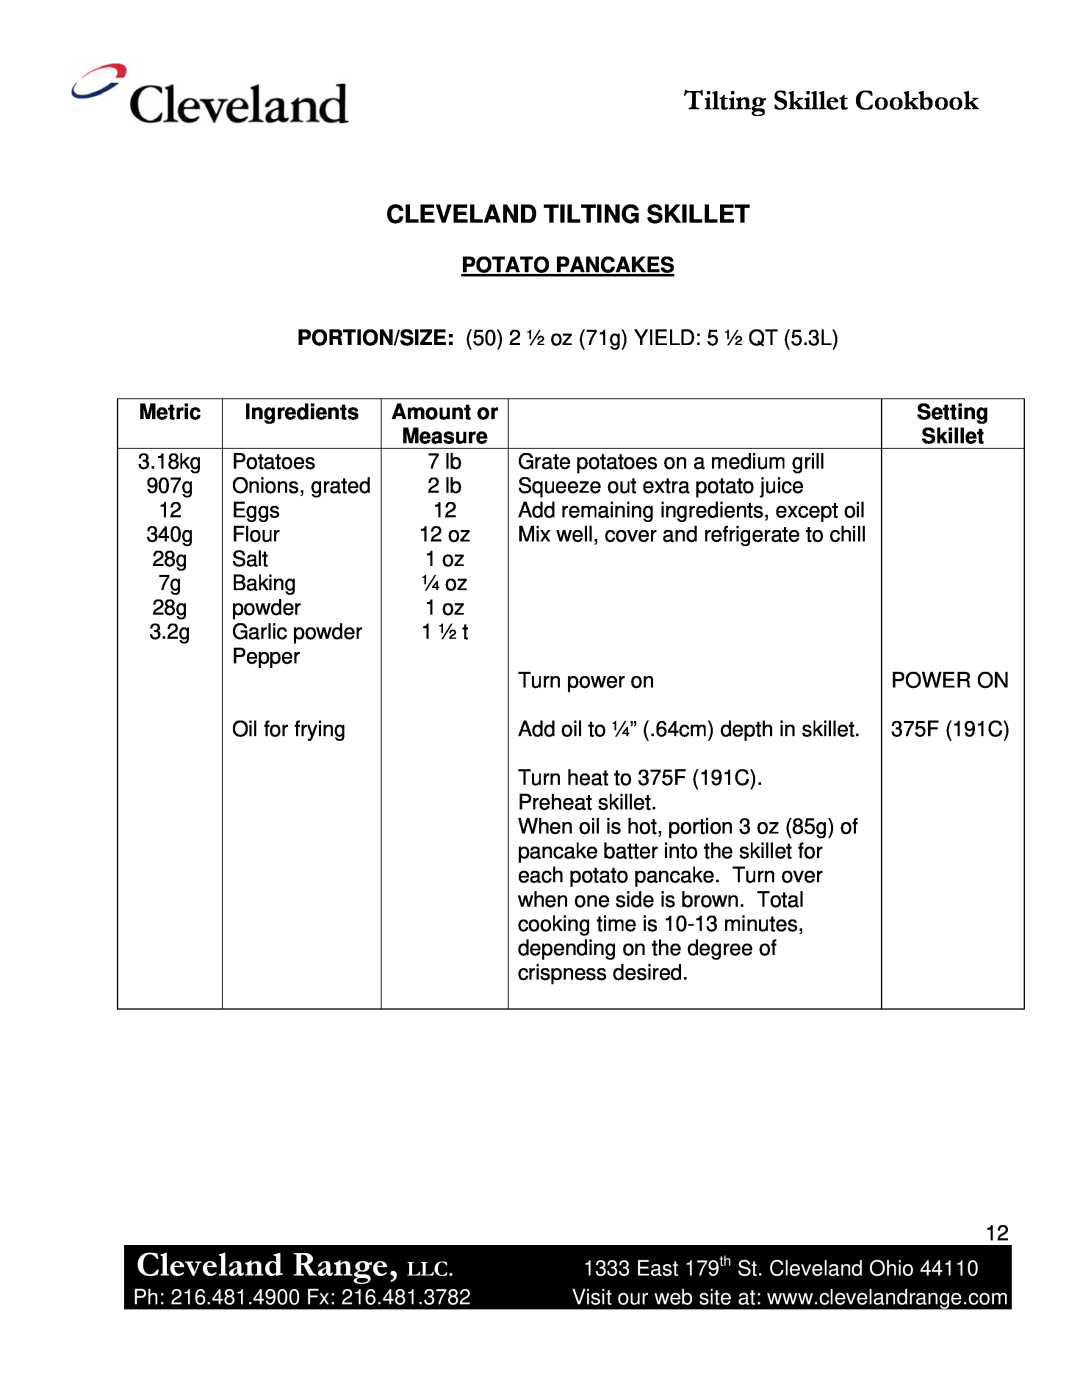 Cleveland Range Skillet/Braising manual Cleveland Range, LLC, Tilting Skillet Cookbook, Cleveland Tilting Skillet, Metric 